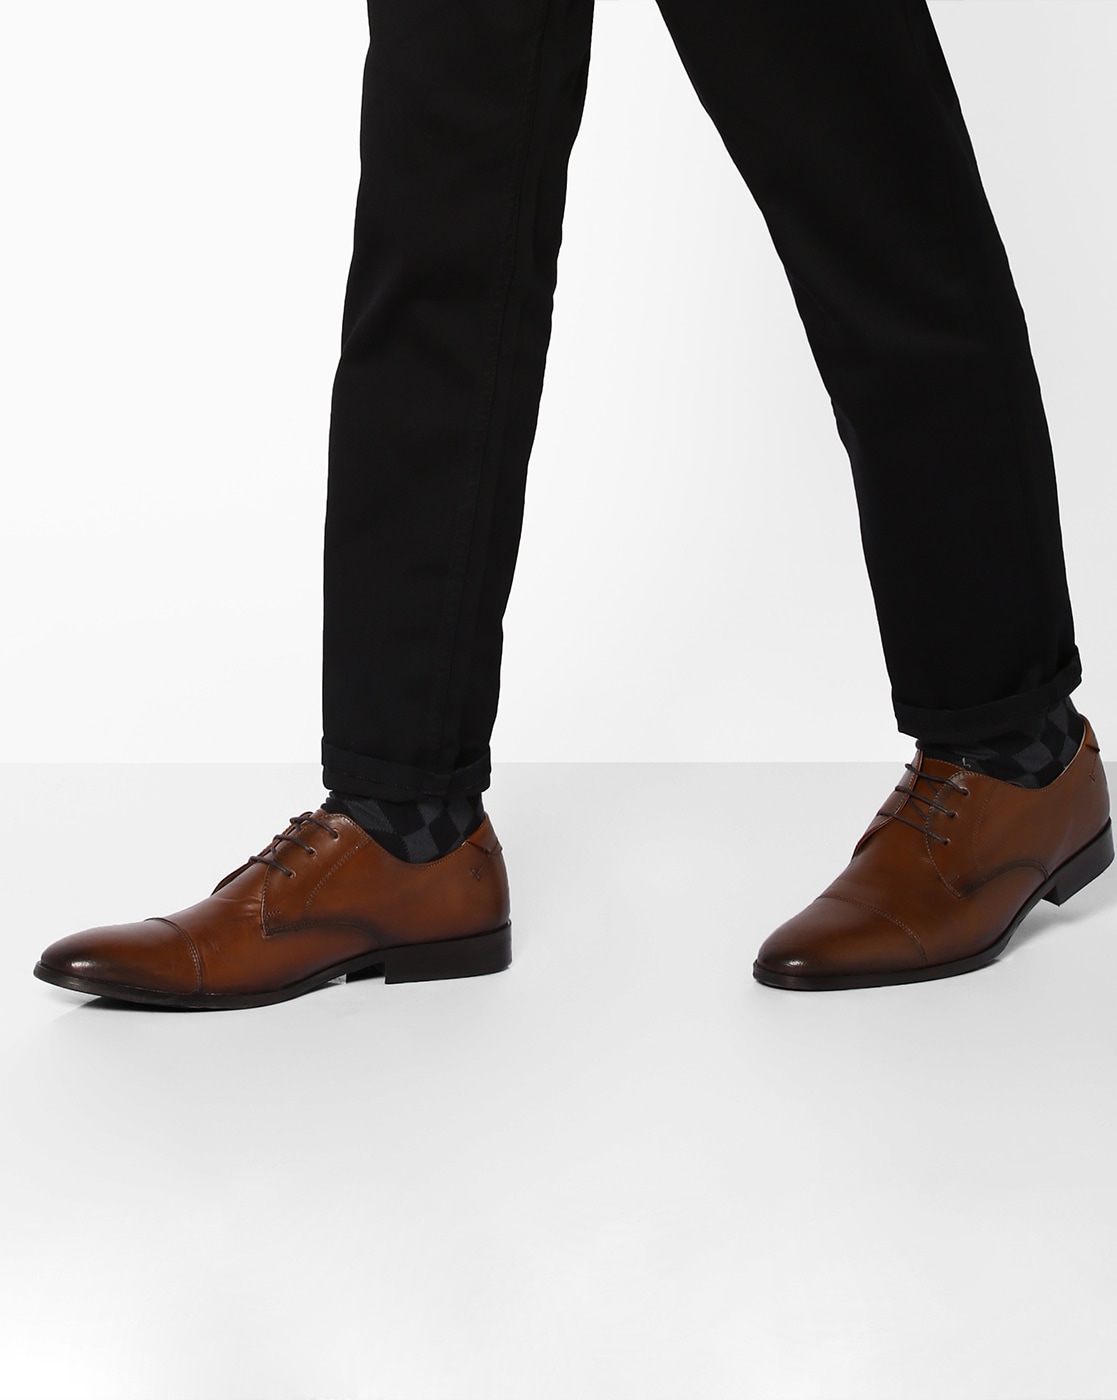 teakwood leather formal shoes